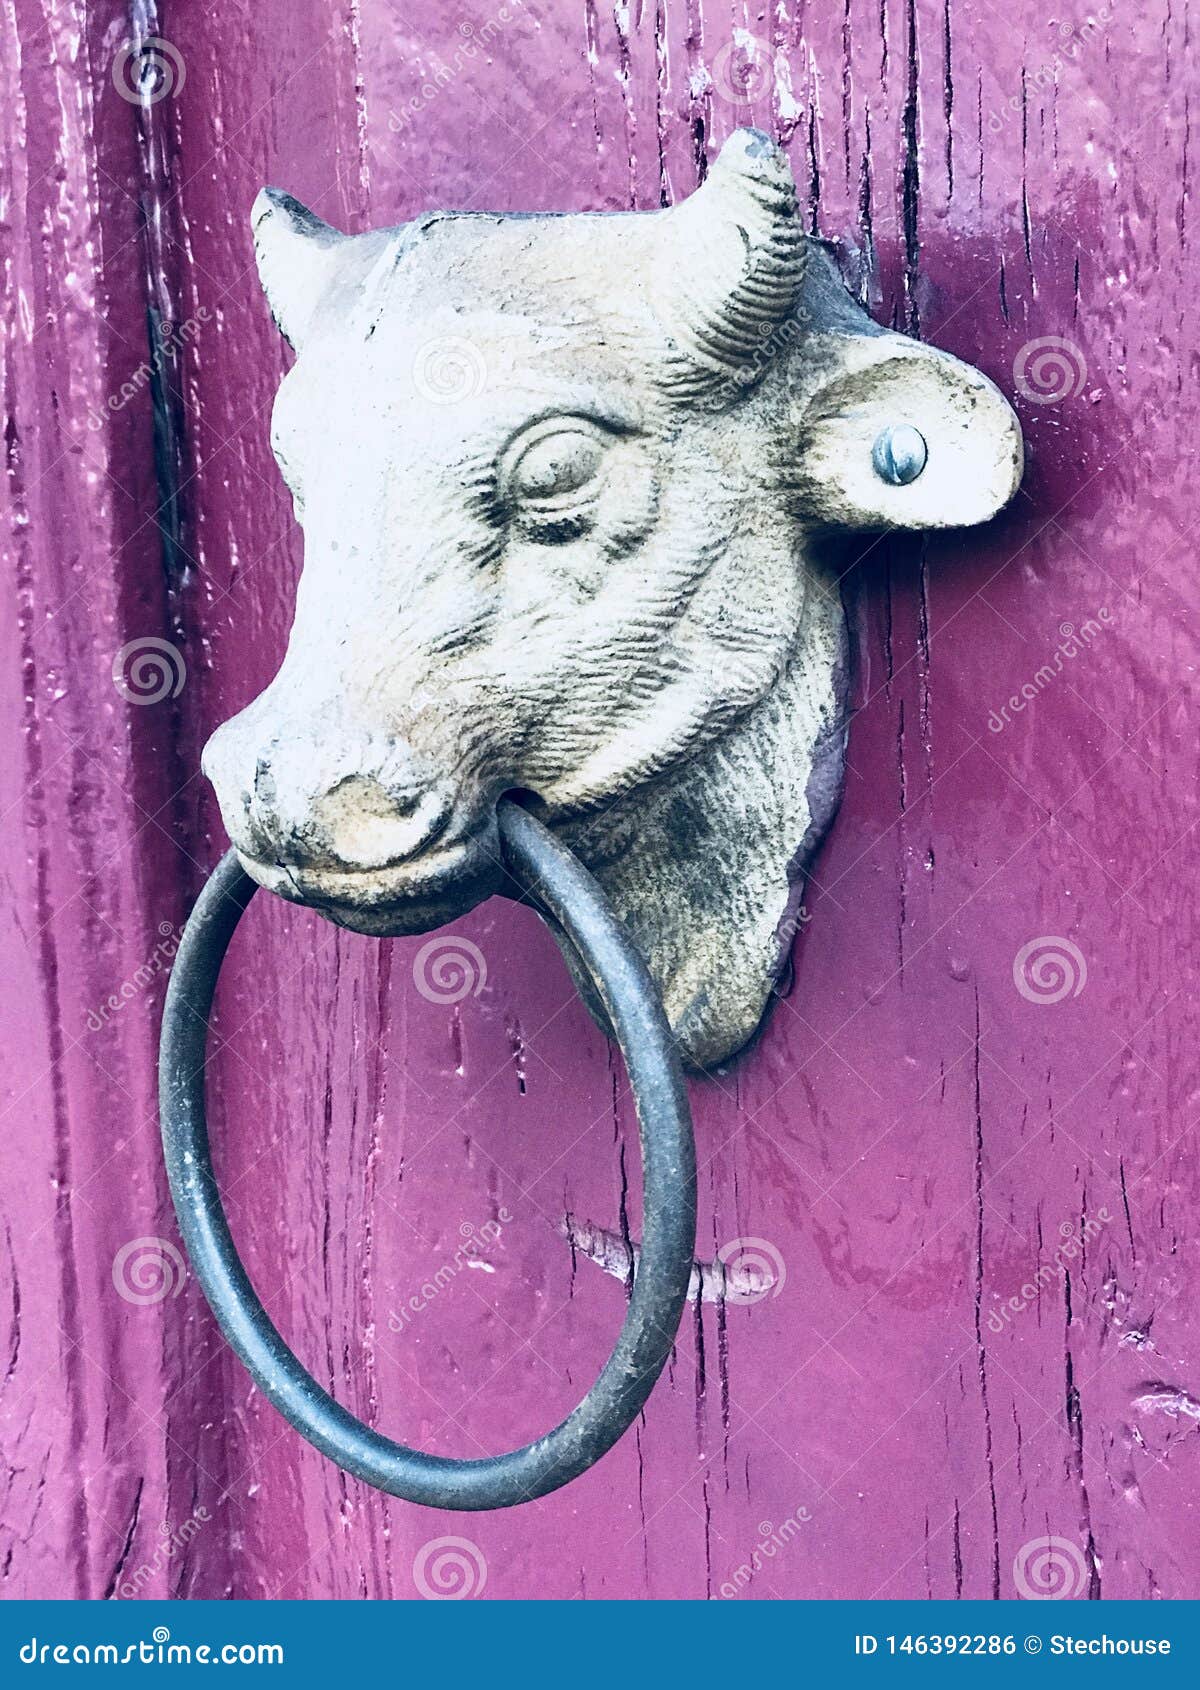 a door knocker in  of a bull in merida, mexico - merida - the yucatan